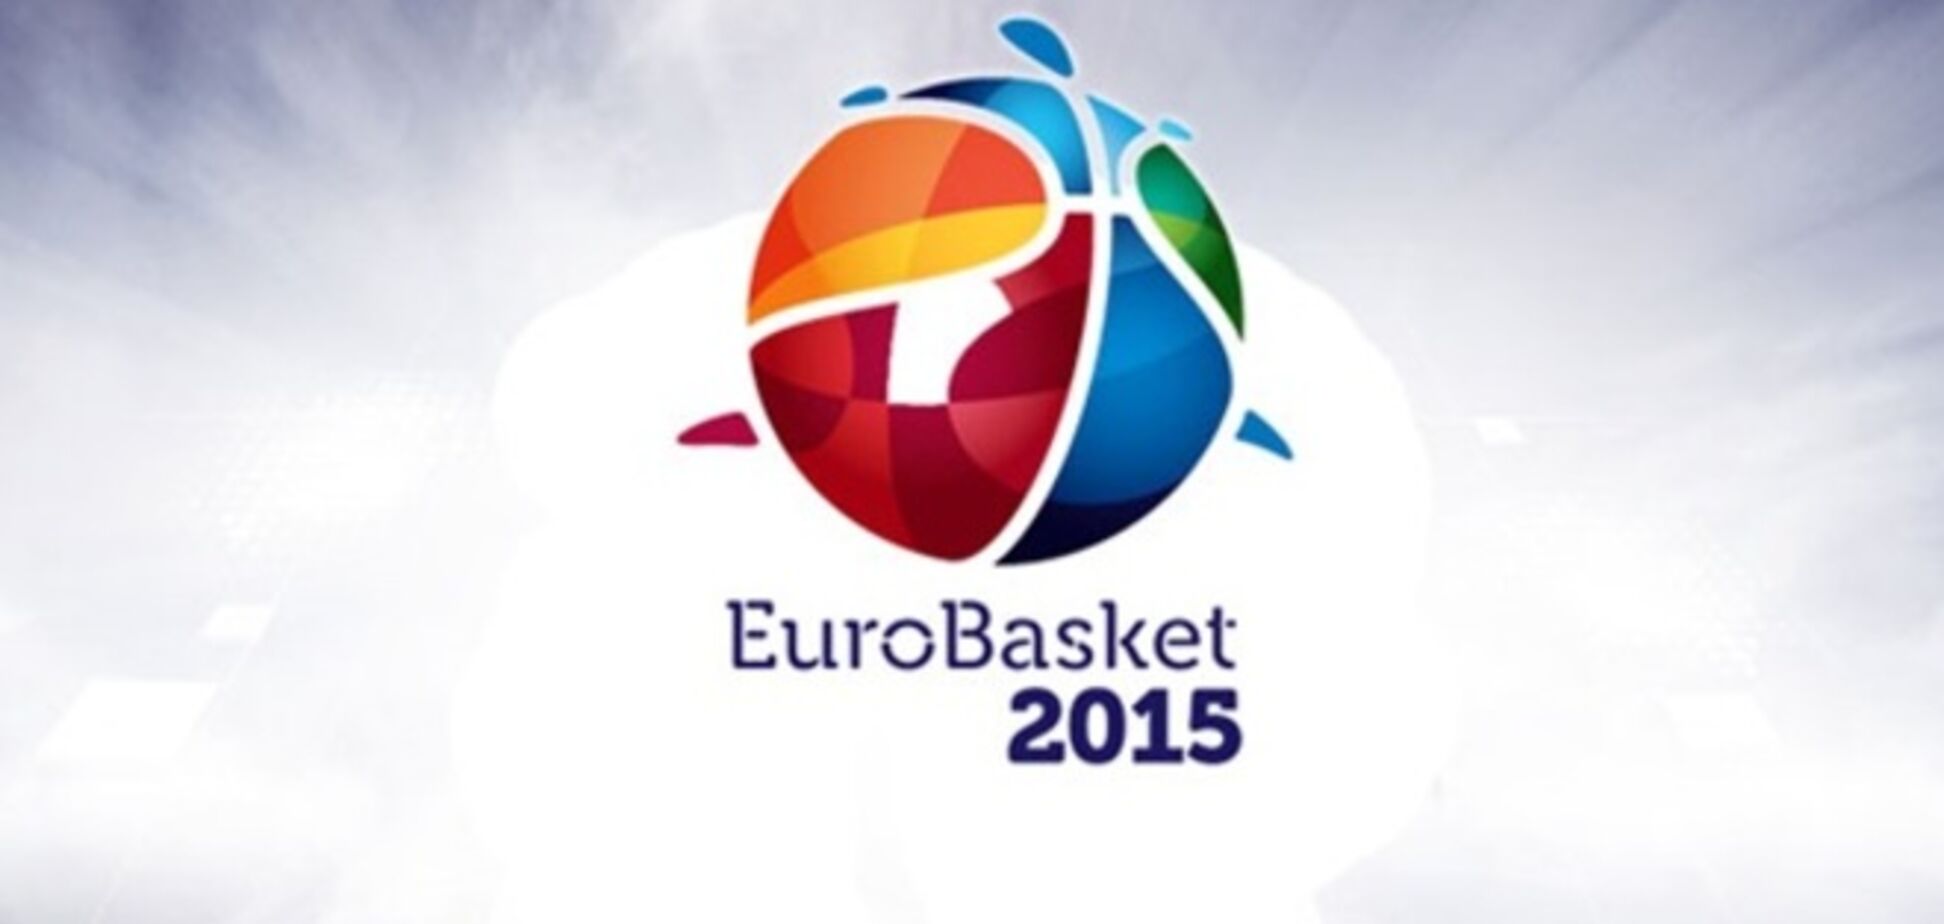 Украина попала во вторую корзину при жеребьевке Евробаскета-2015